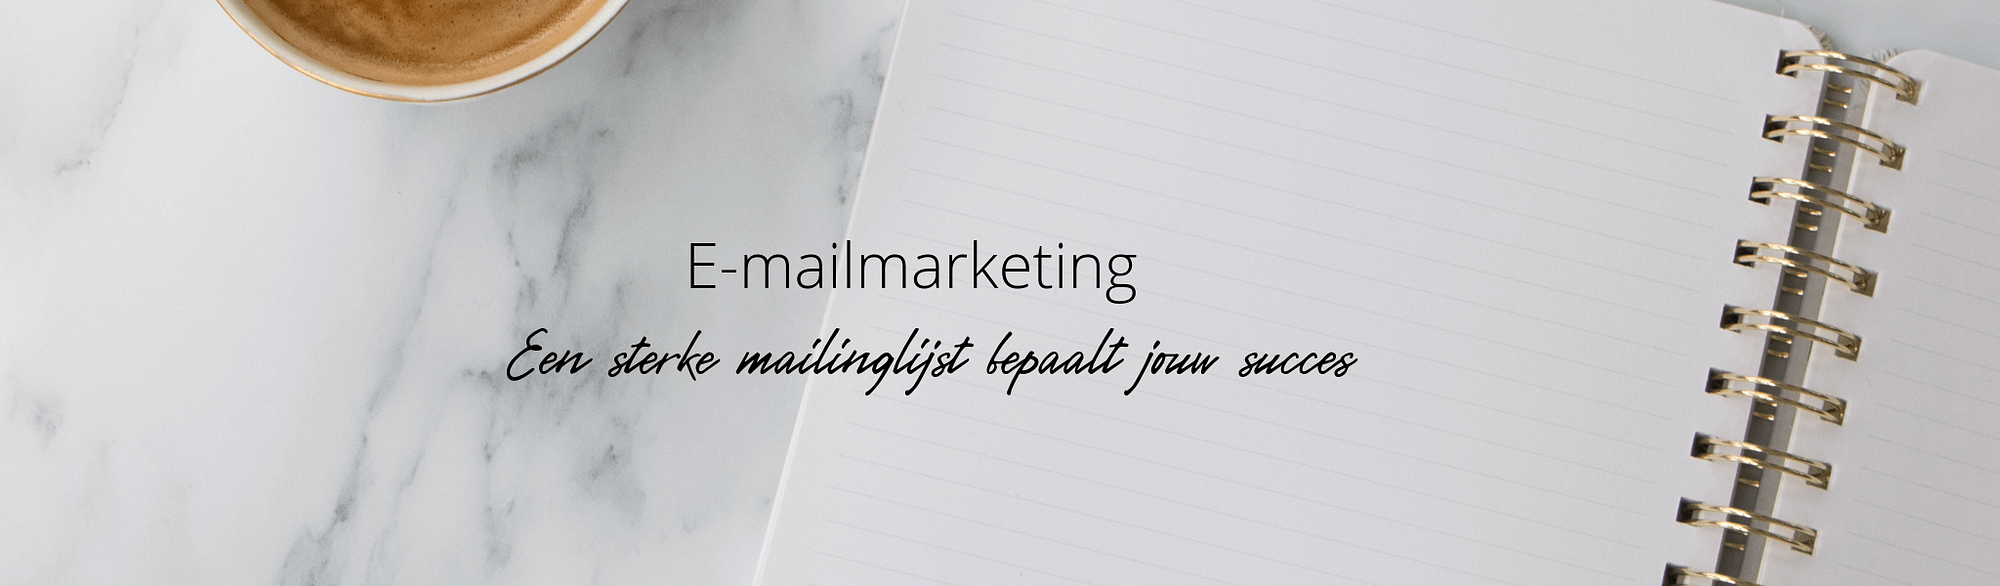 _E-mailmarketing_ funnel marketing voor ondernemers in belgië